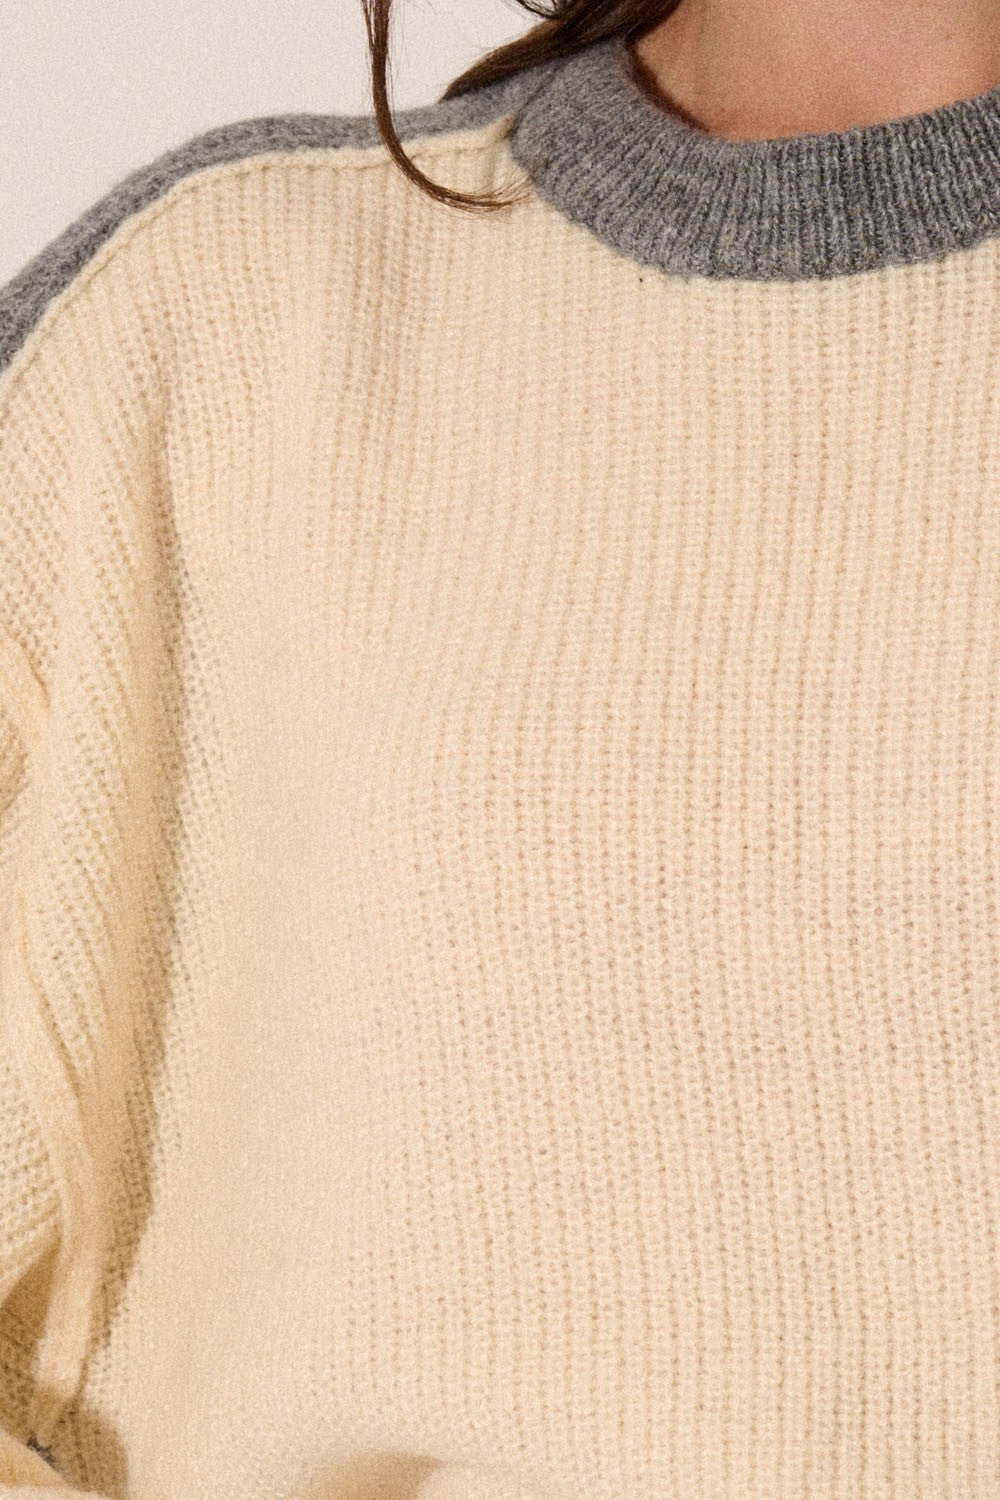 Colder Days Colorblock Sweater